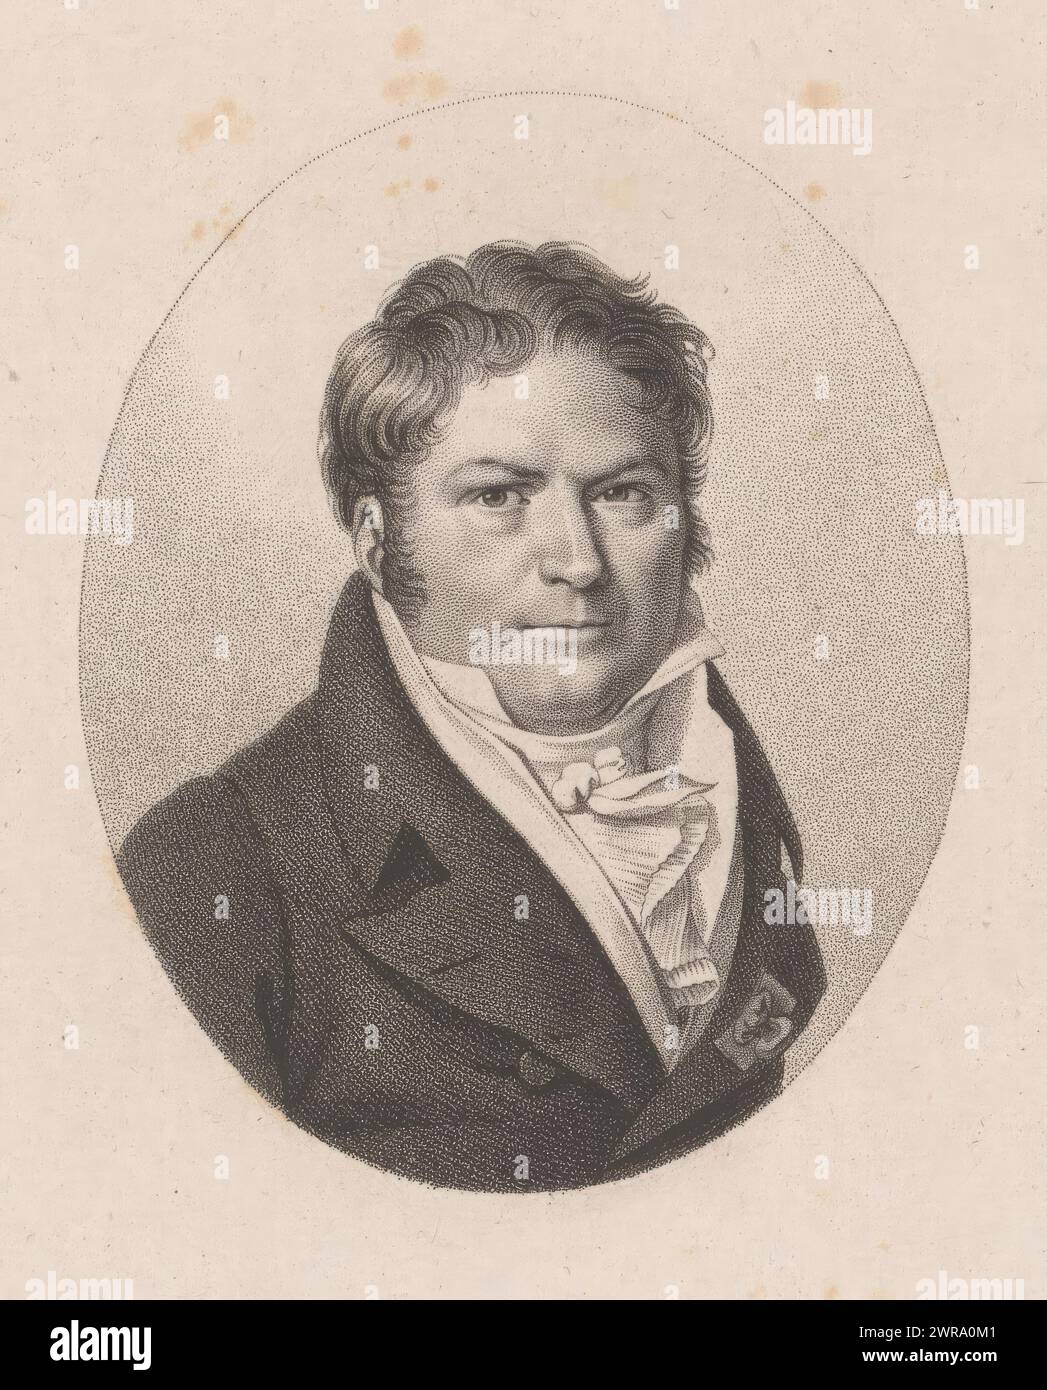 Portrait of Guillaume Louis Ternaux, print maker: Ambroise Tardieu, Paris, 1820 - 1821, paper, engraving, height 209 mm × width 131 mm, print Stock Photo